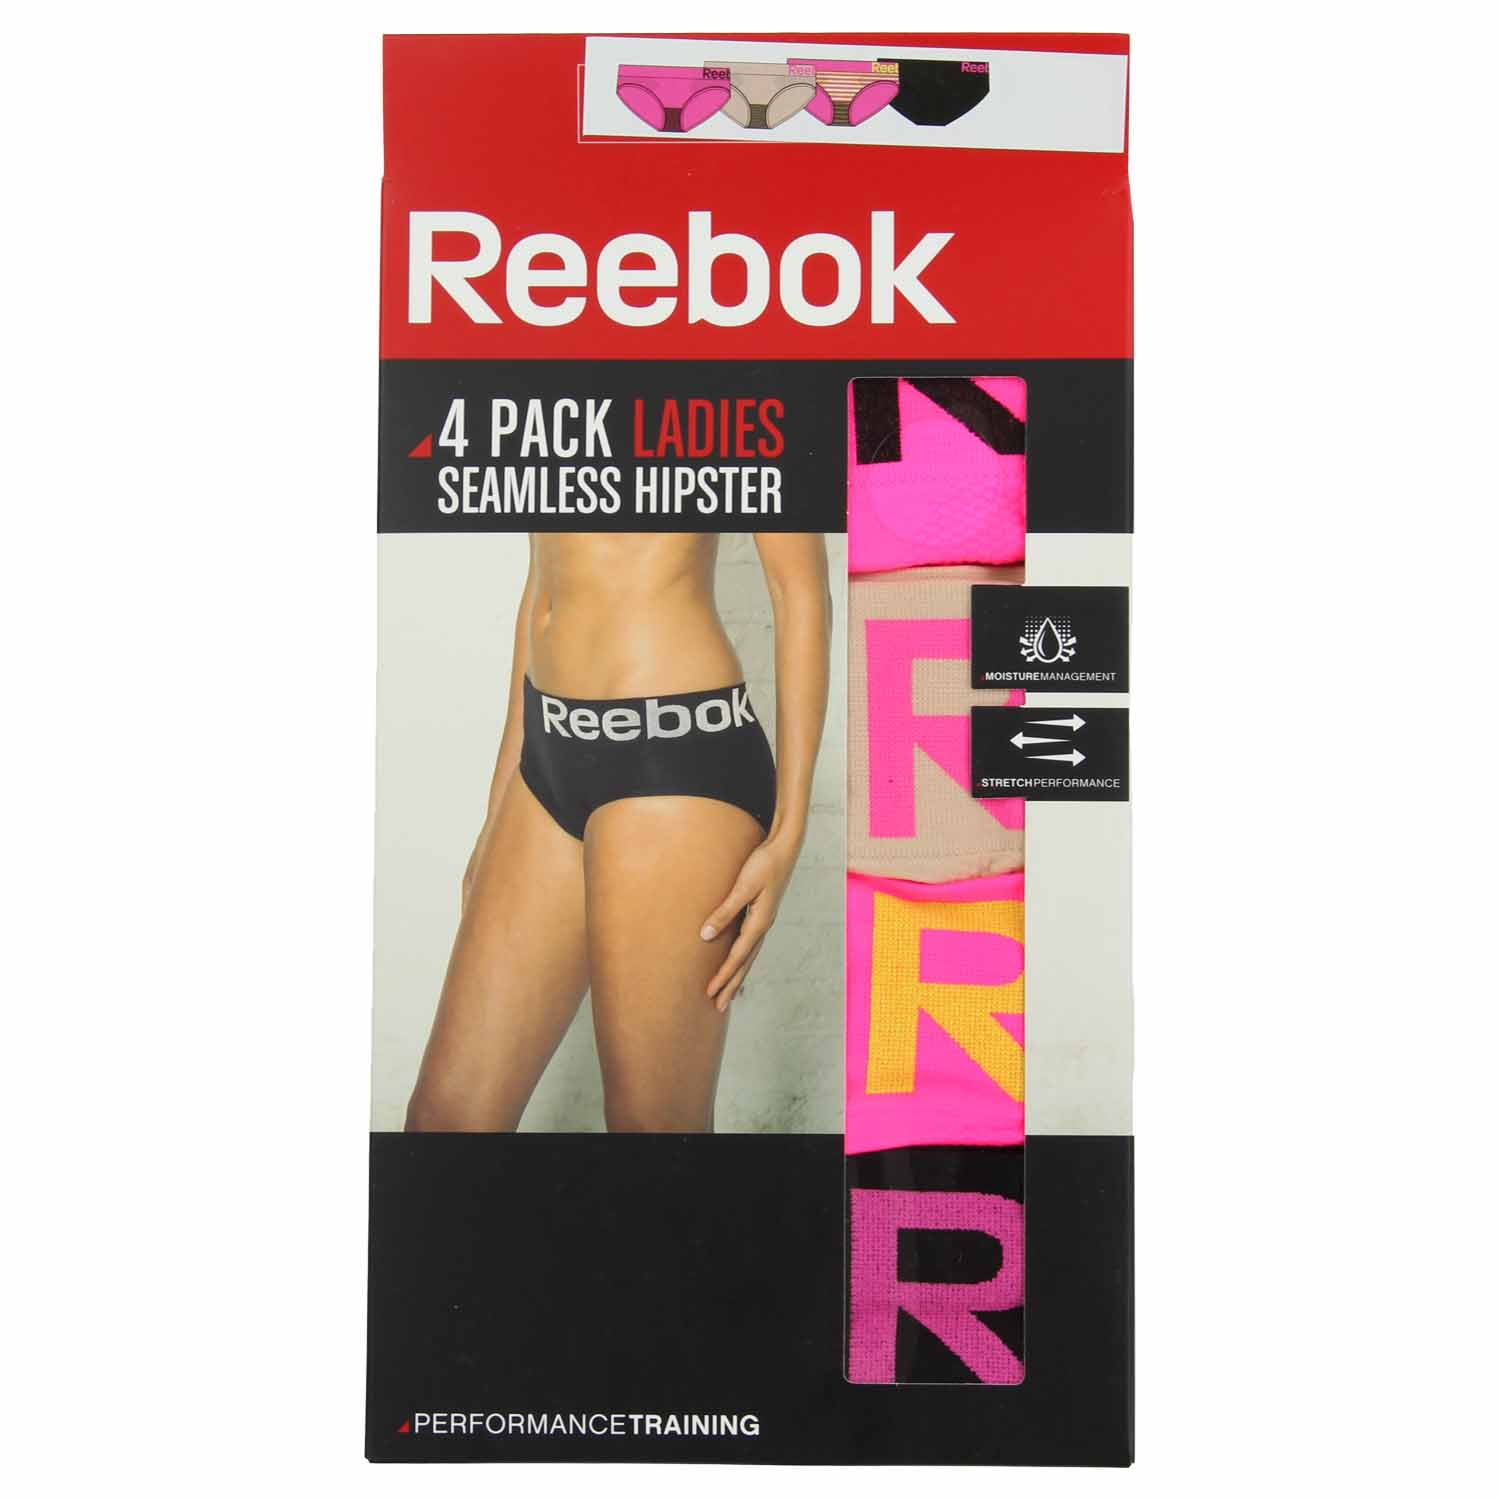 reebok women's panties